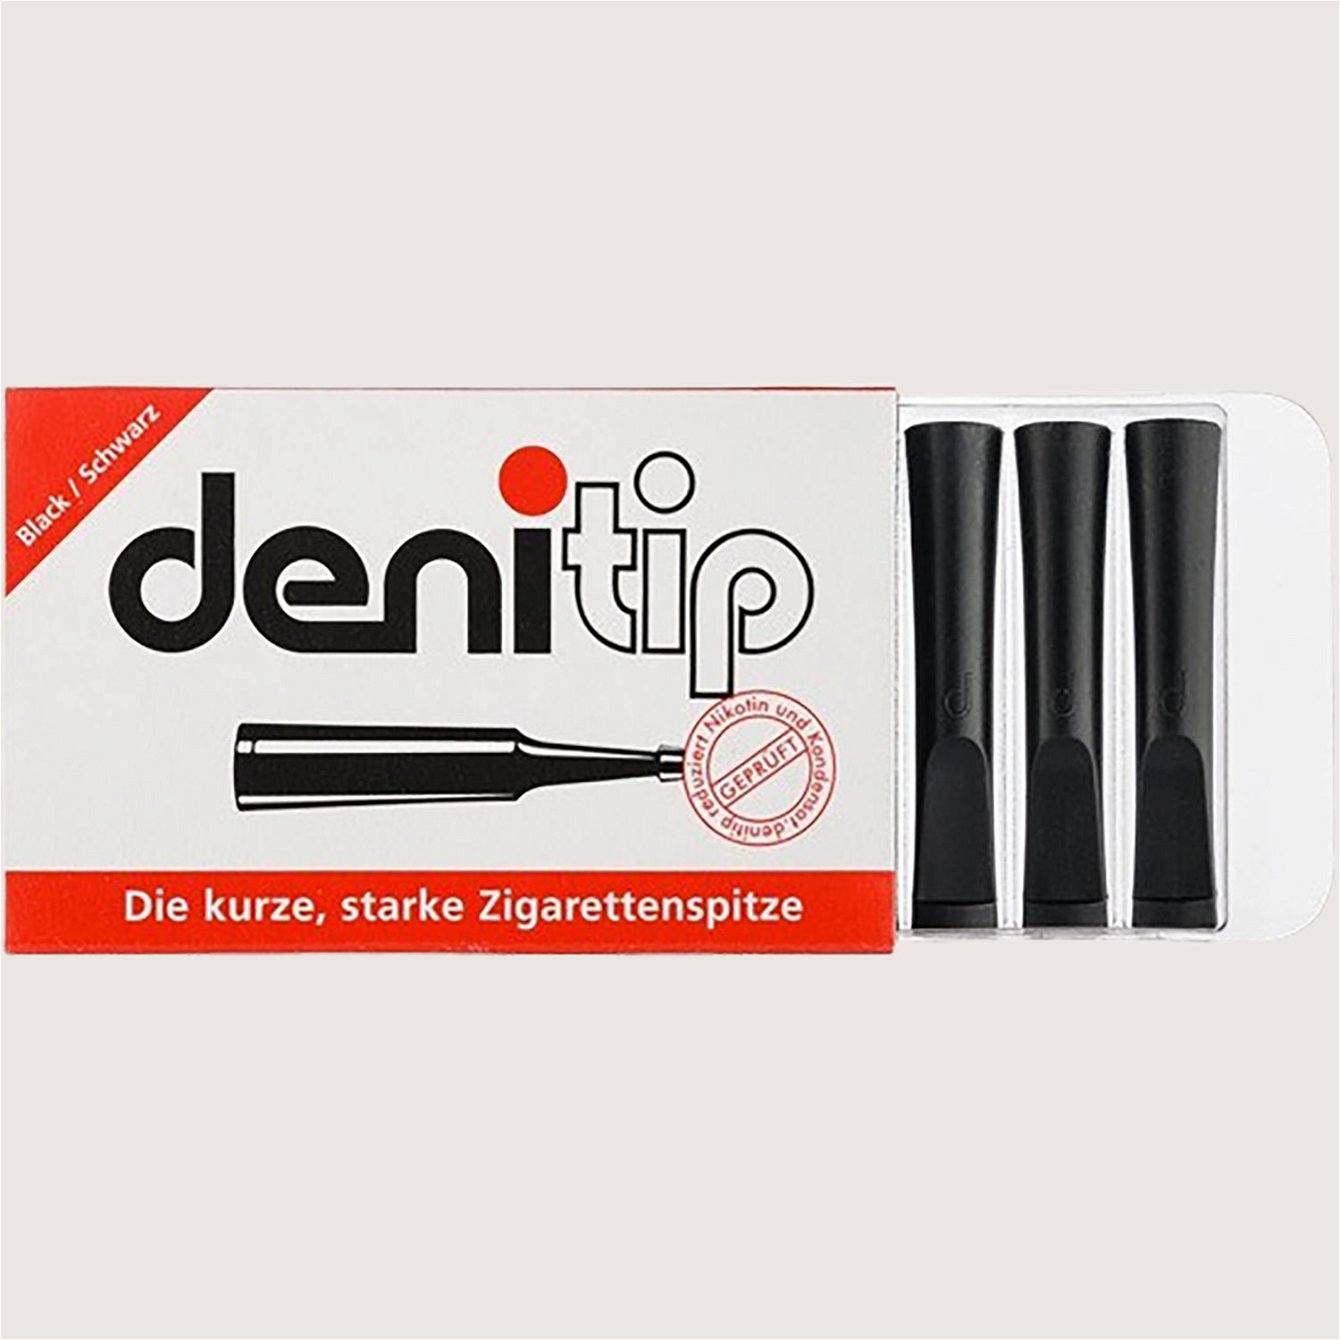 Denicotea Denitip Schwarz 1 Spitze